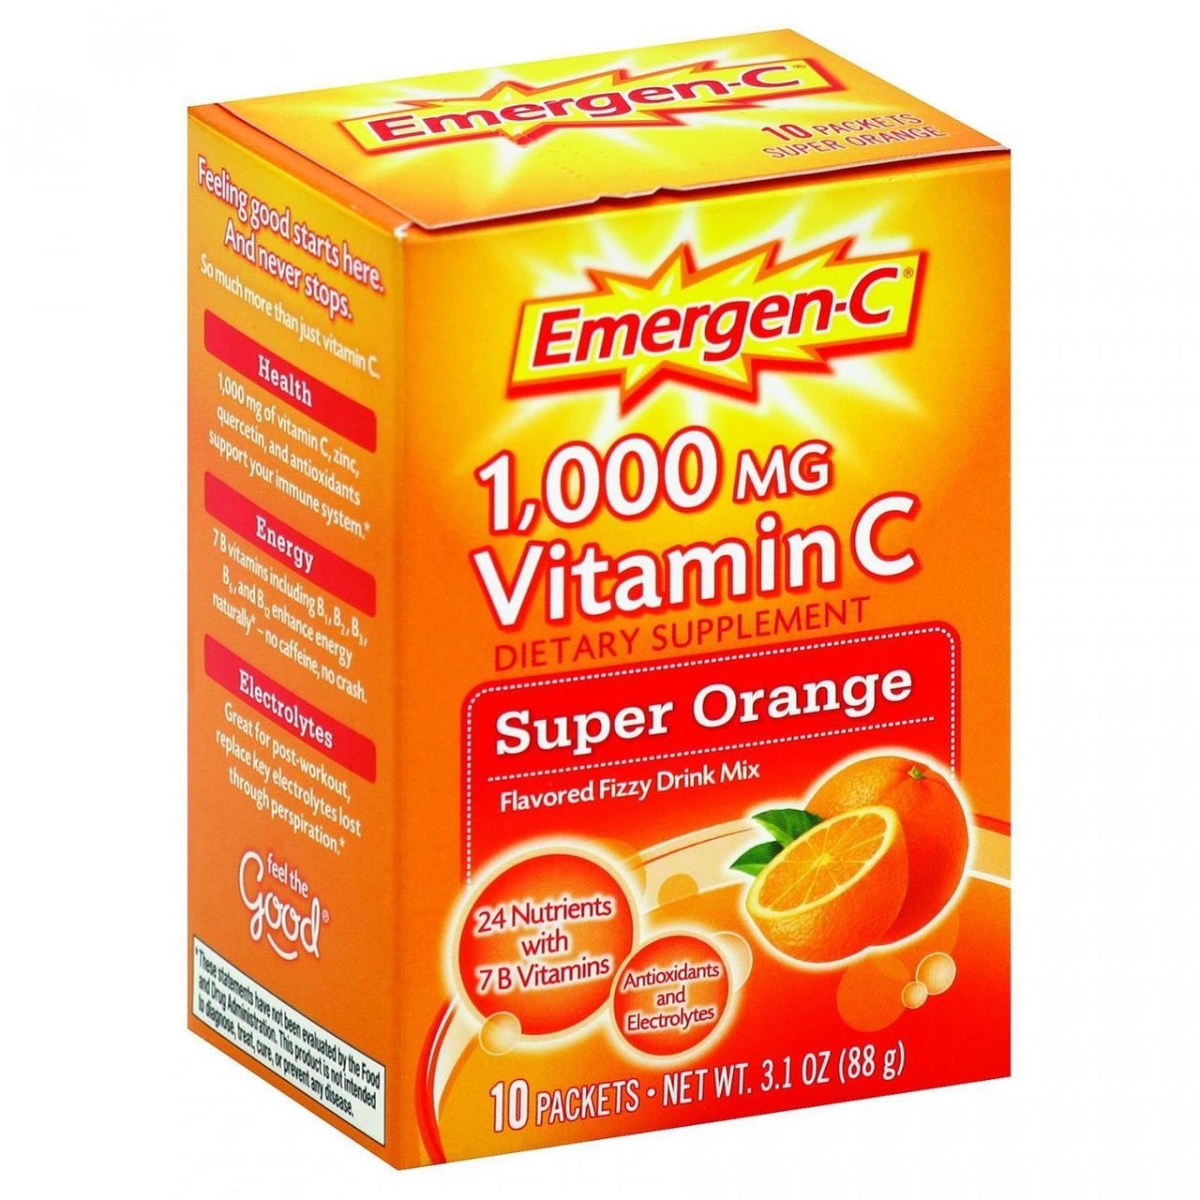 Hg0656942 1000 Mg Original Formula Vitamin C - Super Orange, 10 Packets